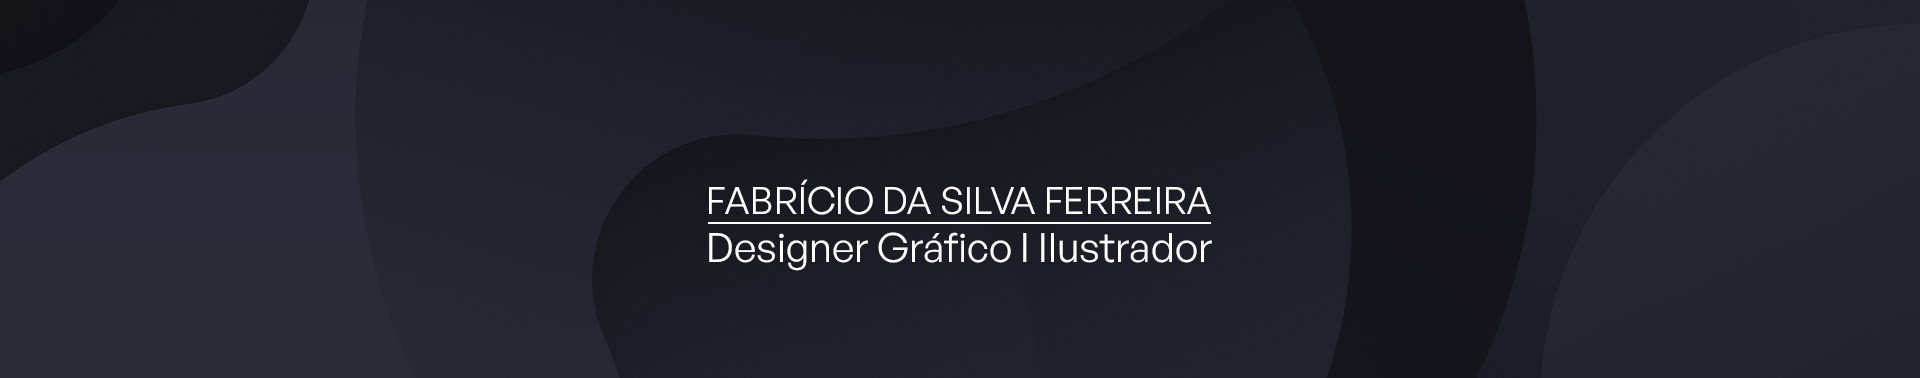 Fabrício da Silva Ferreira profil başlığı